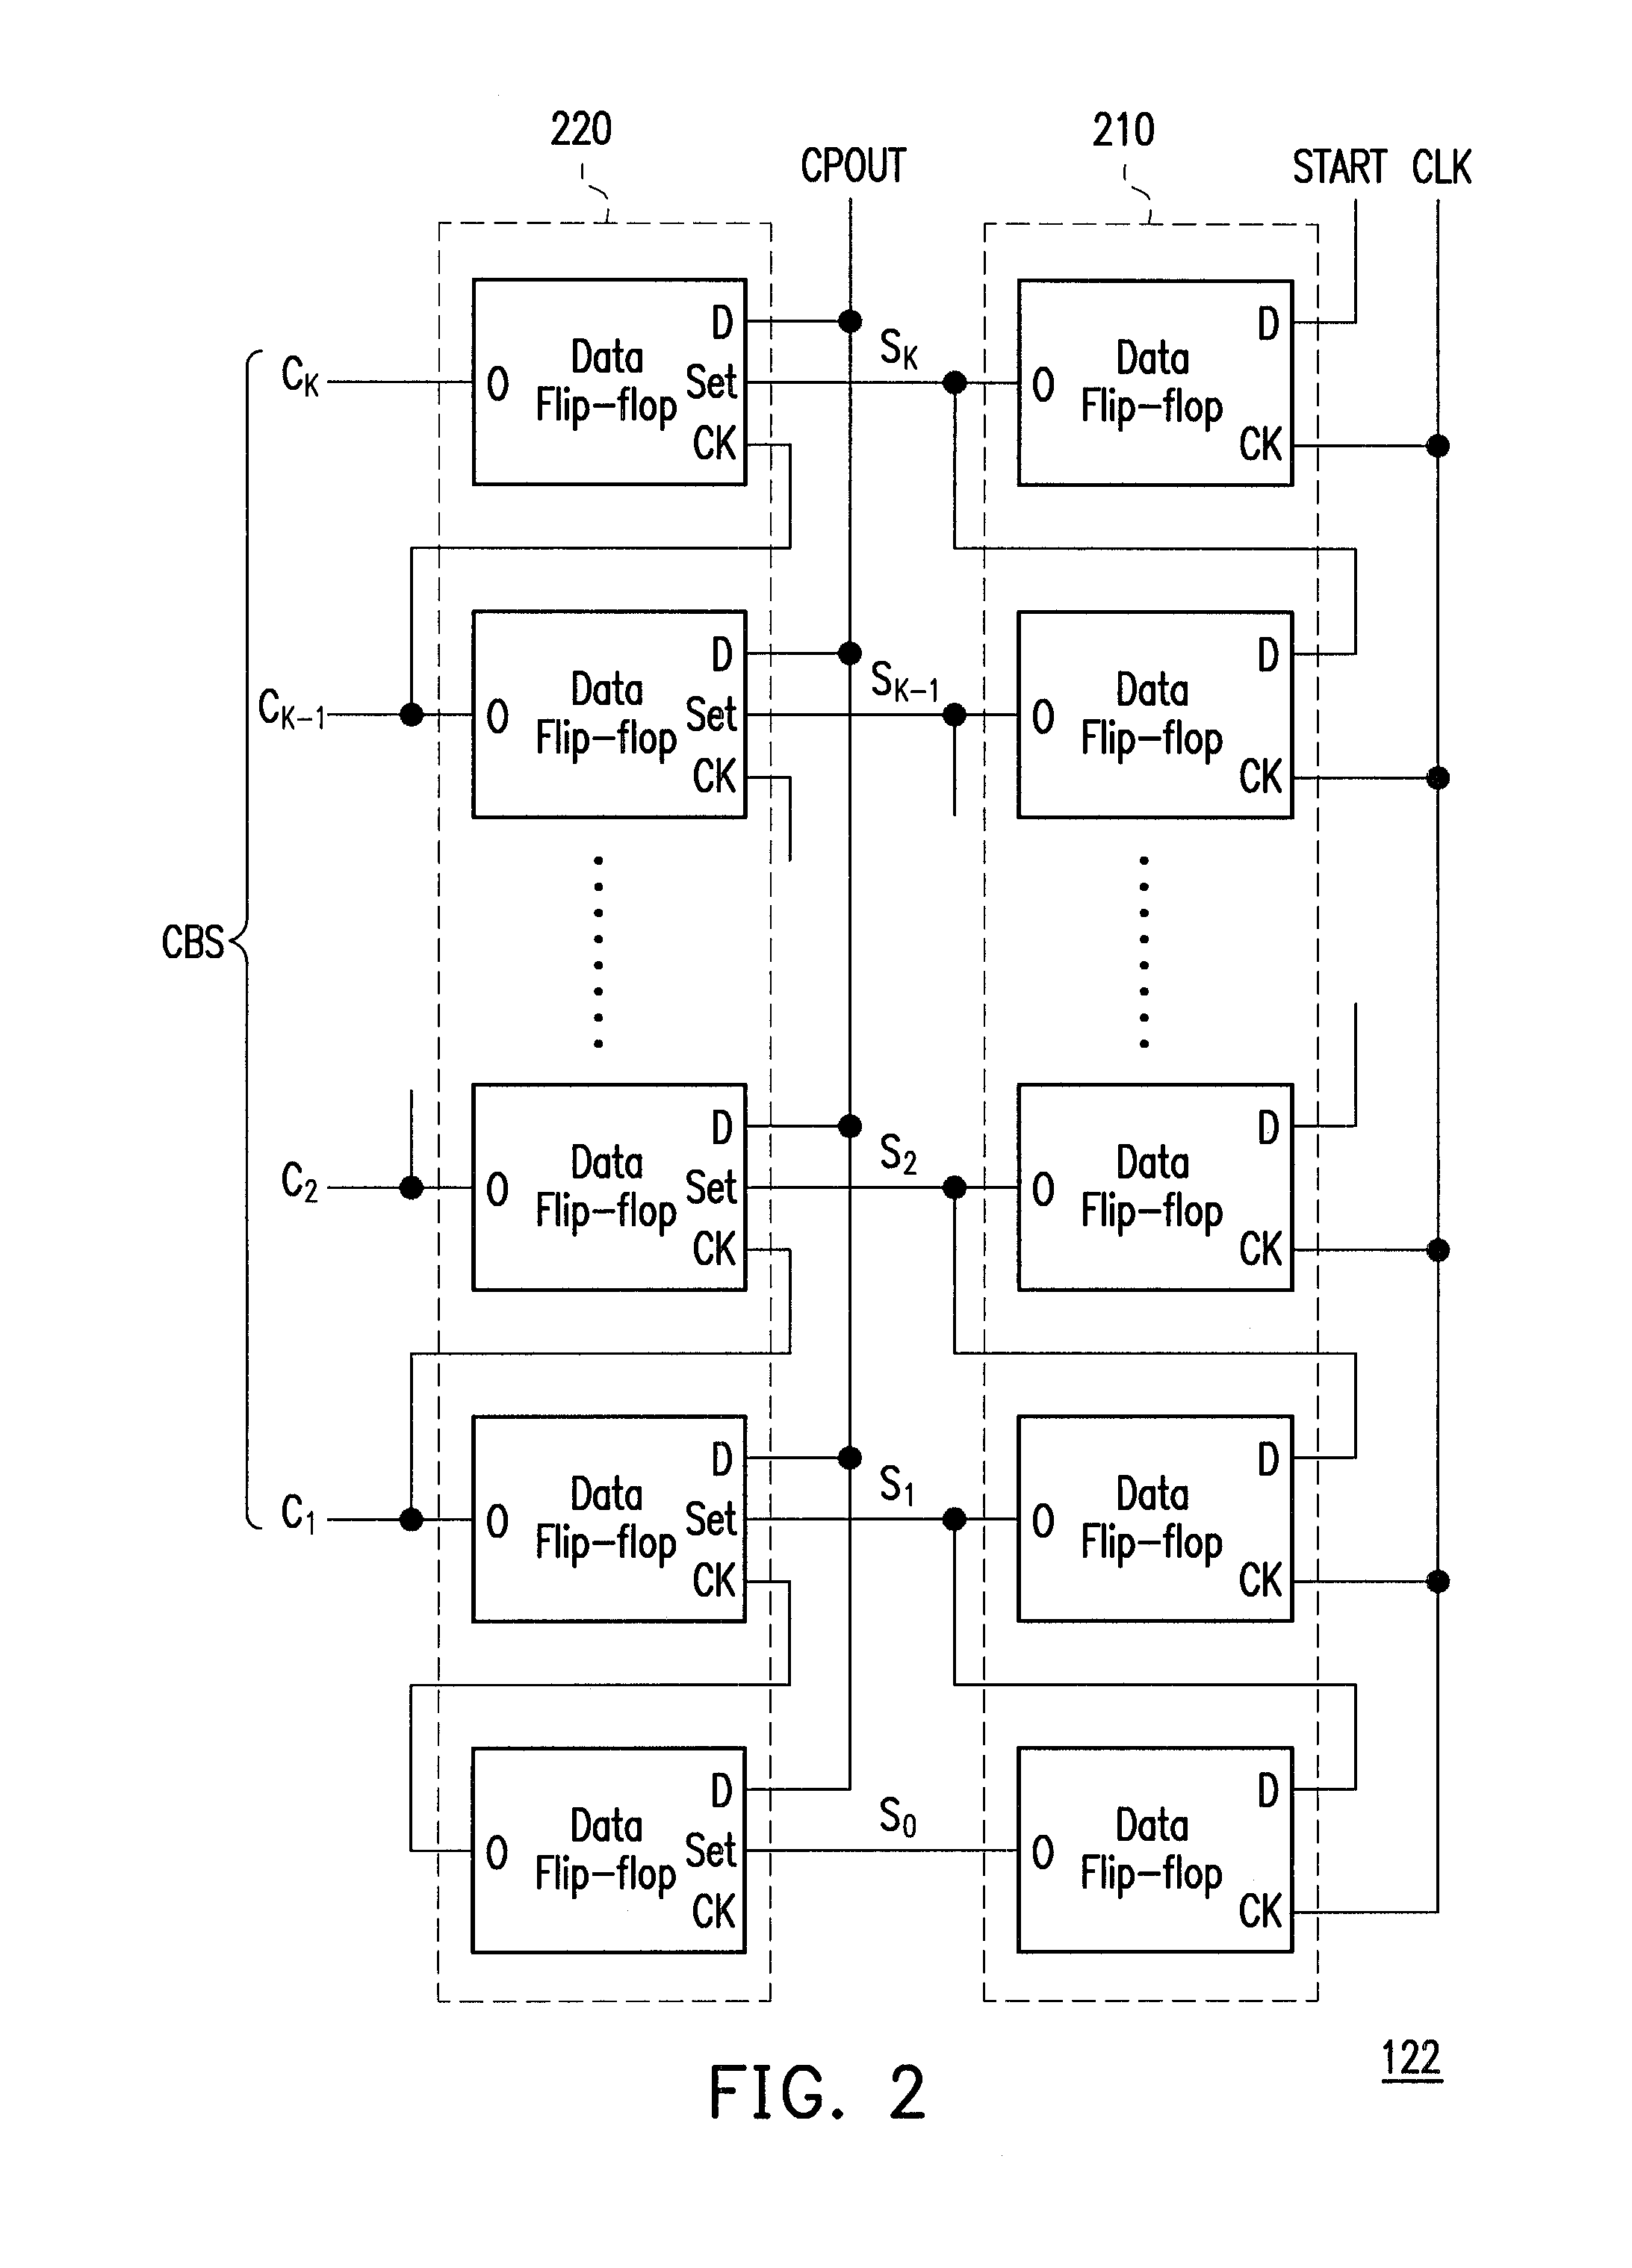 Calibration circuit for voltage regulator